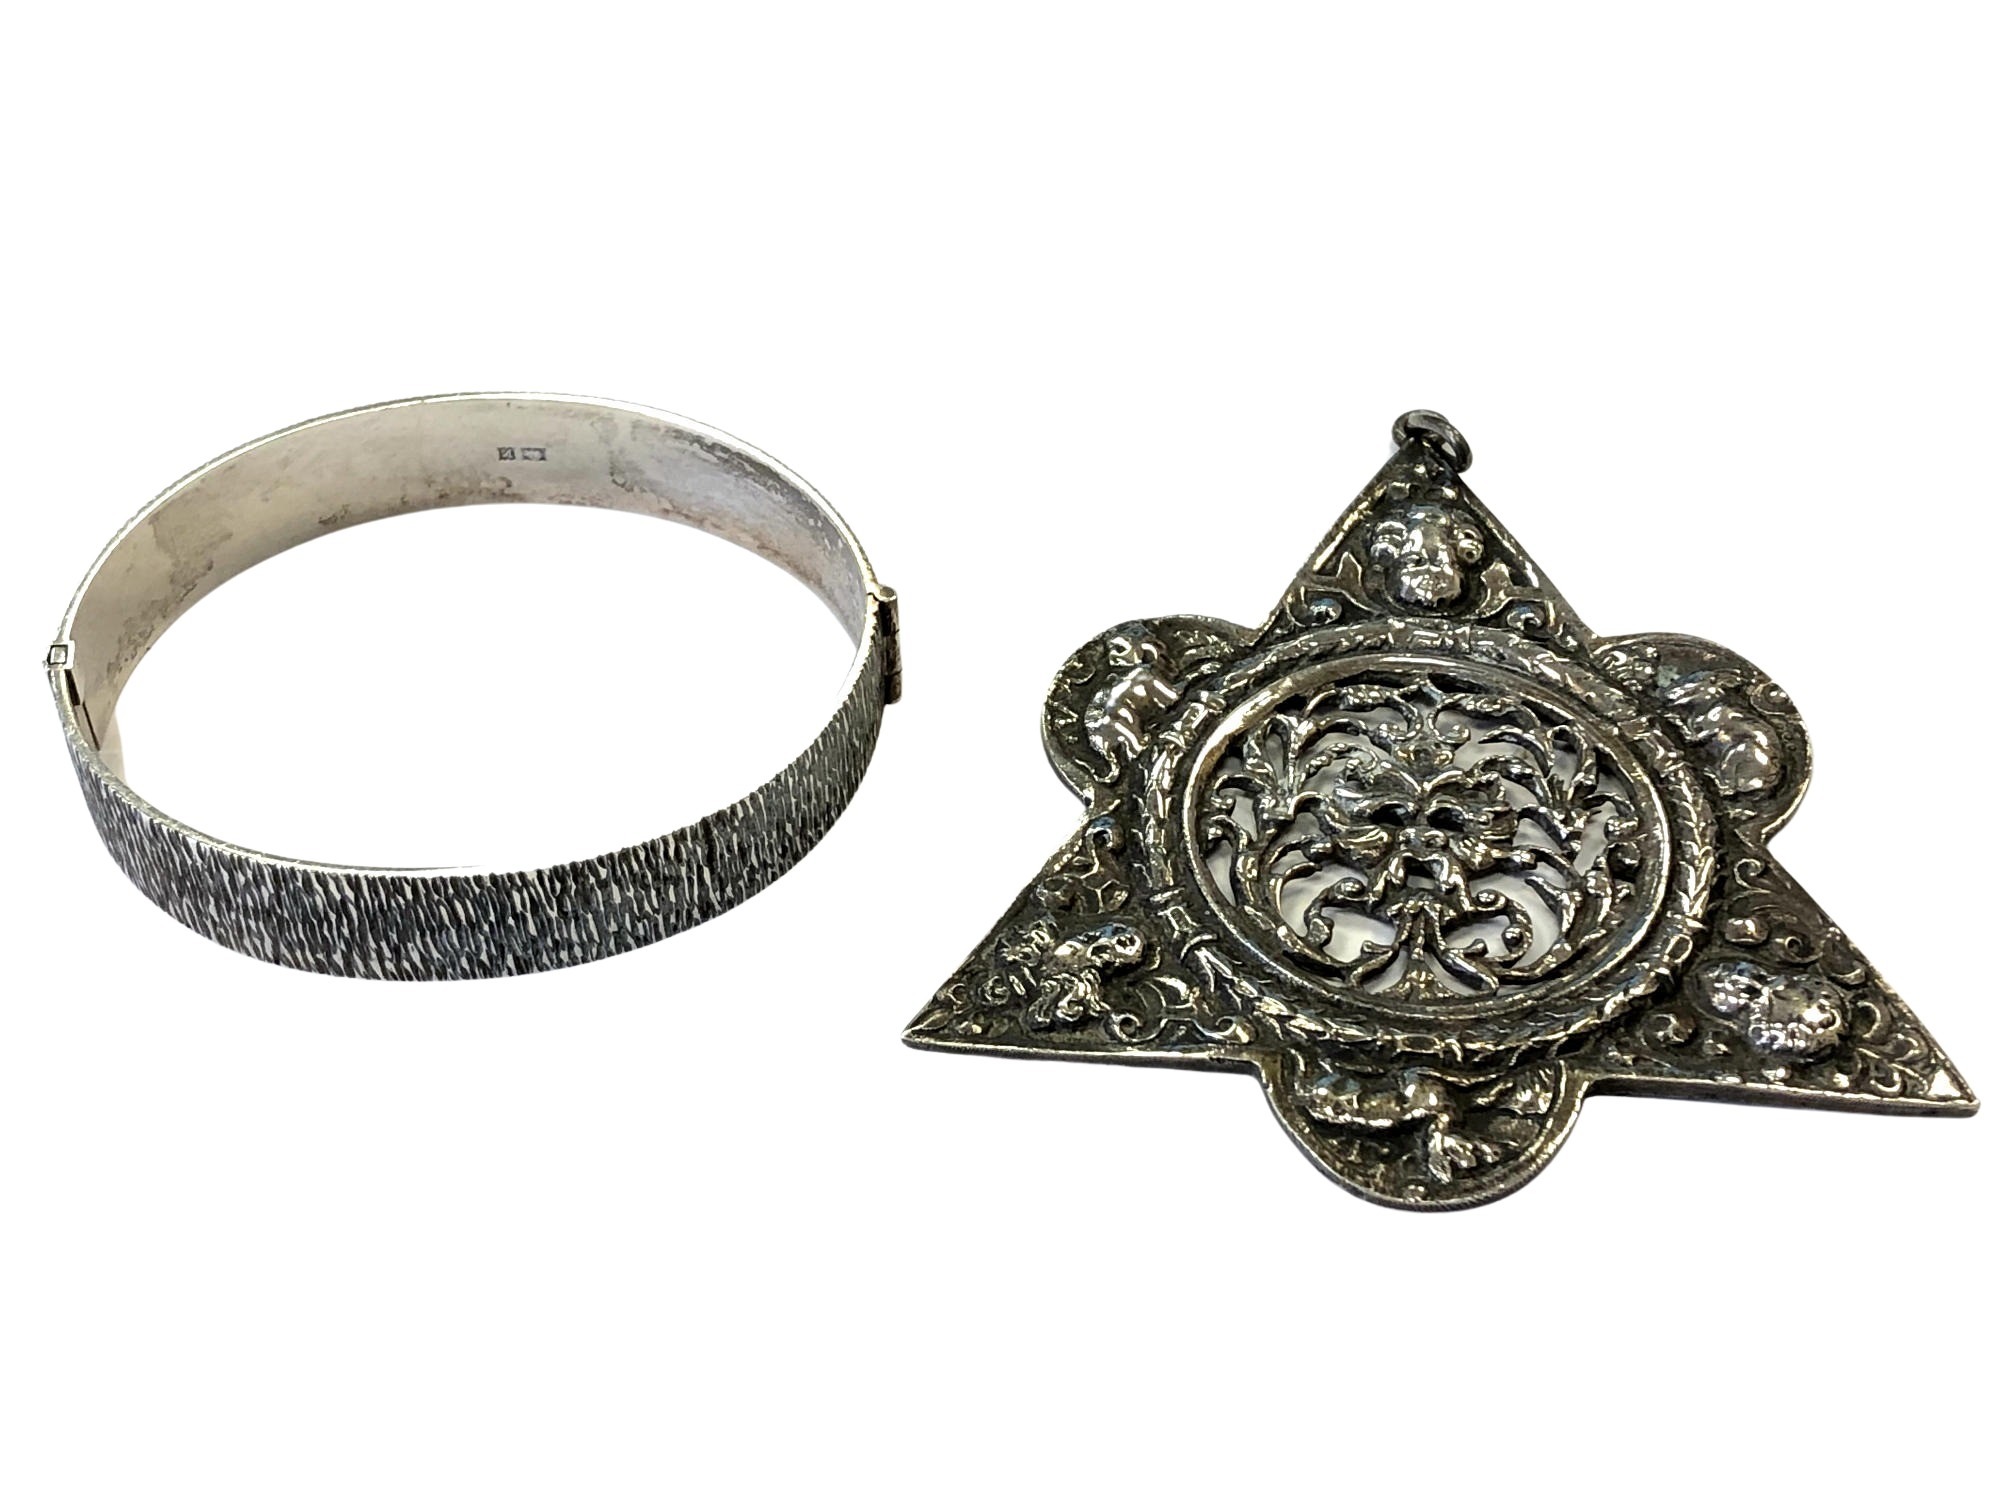 An unusual Italian silver pendant and a silver bangle